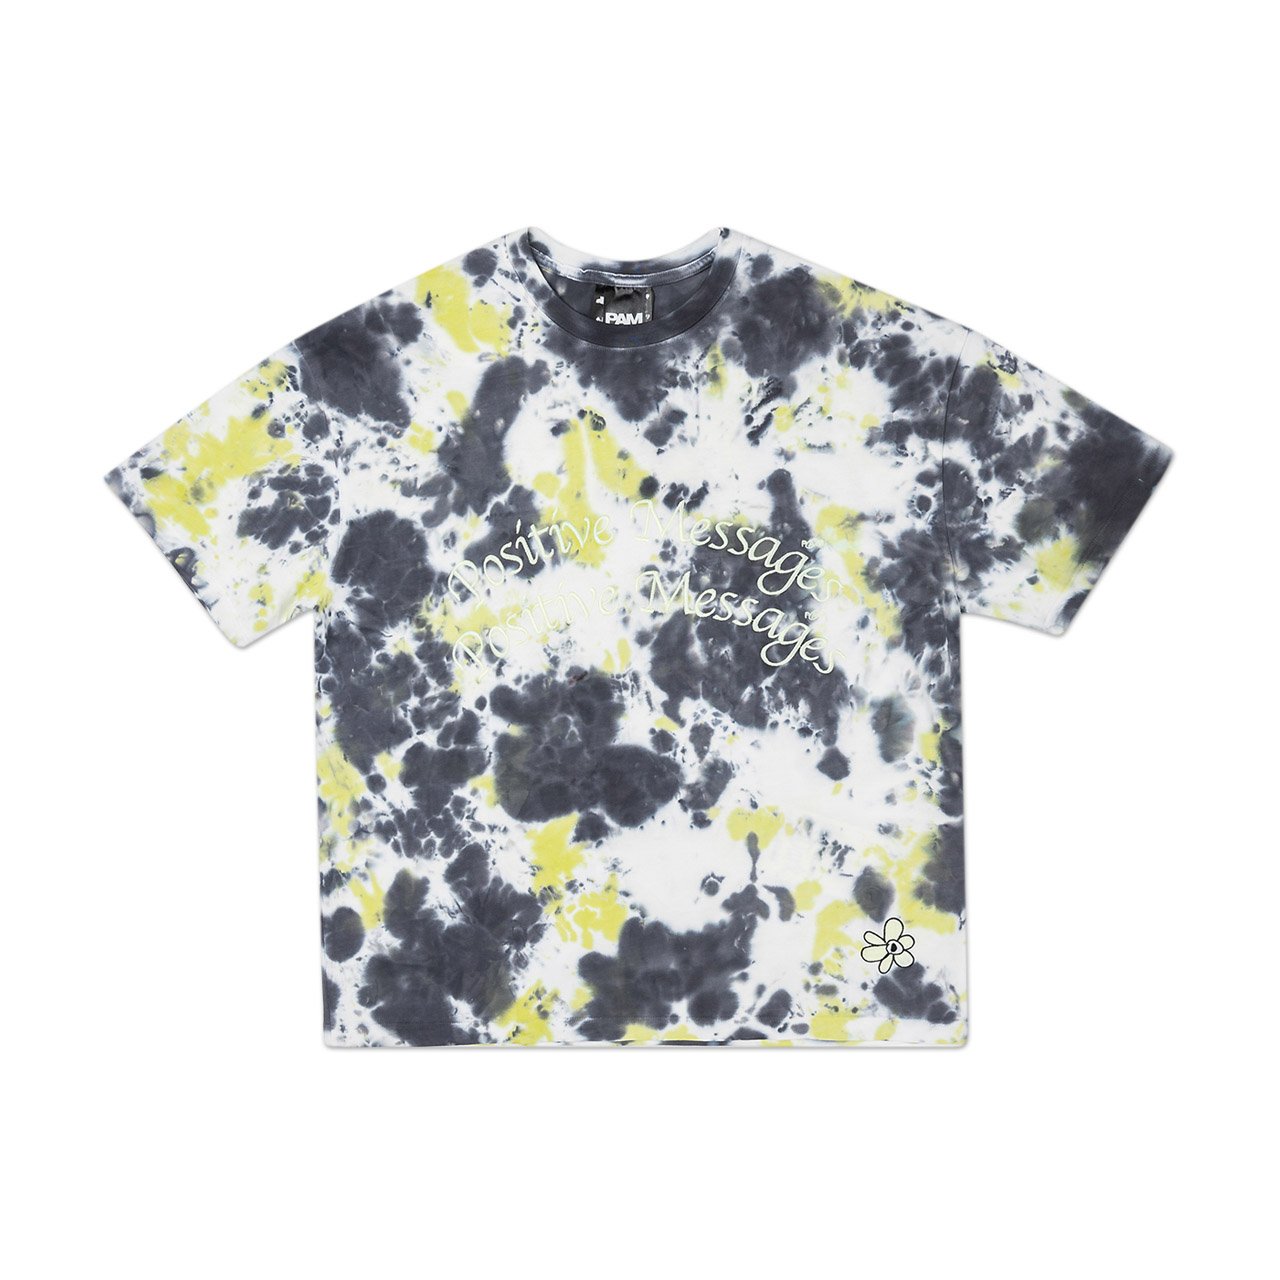 perks and mini haze filter tie dye oversized s/s t-shirt (multi) - 1392-swtd-2 - a.plus - Image - 1